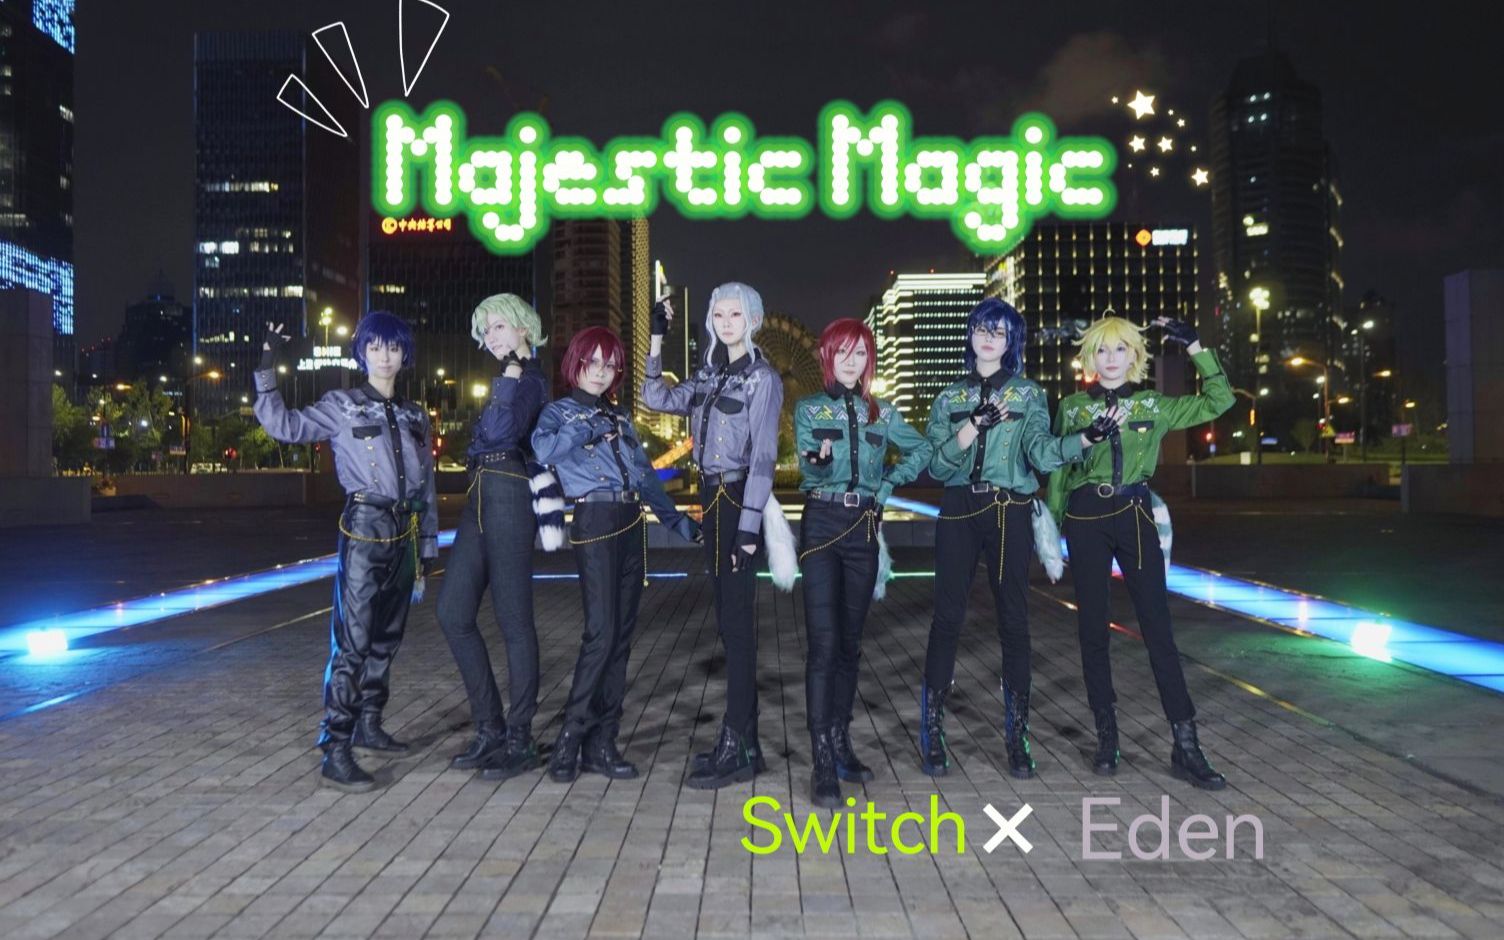 【Majest Magic】mv还原版☆ Switch和Eden为你带来月圆的神迹魔法啦！！